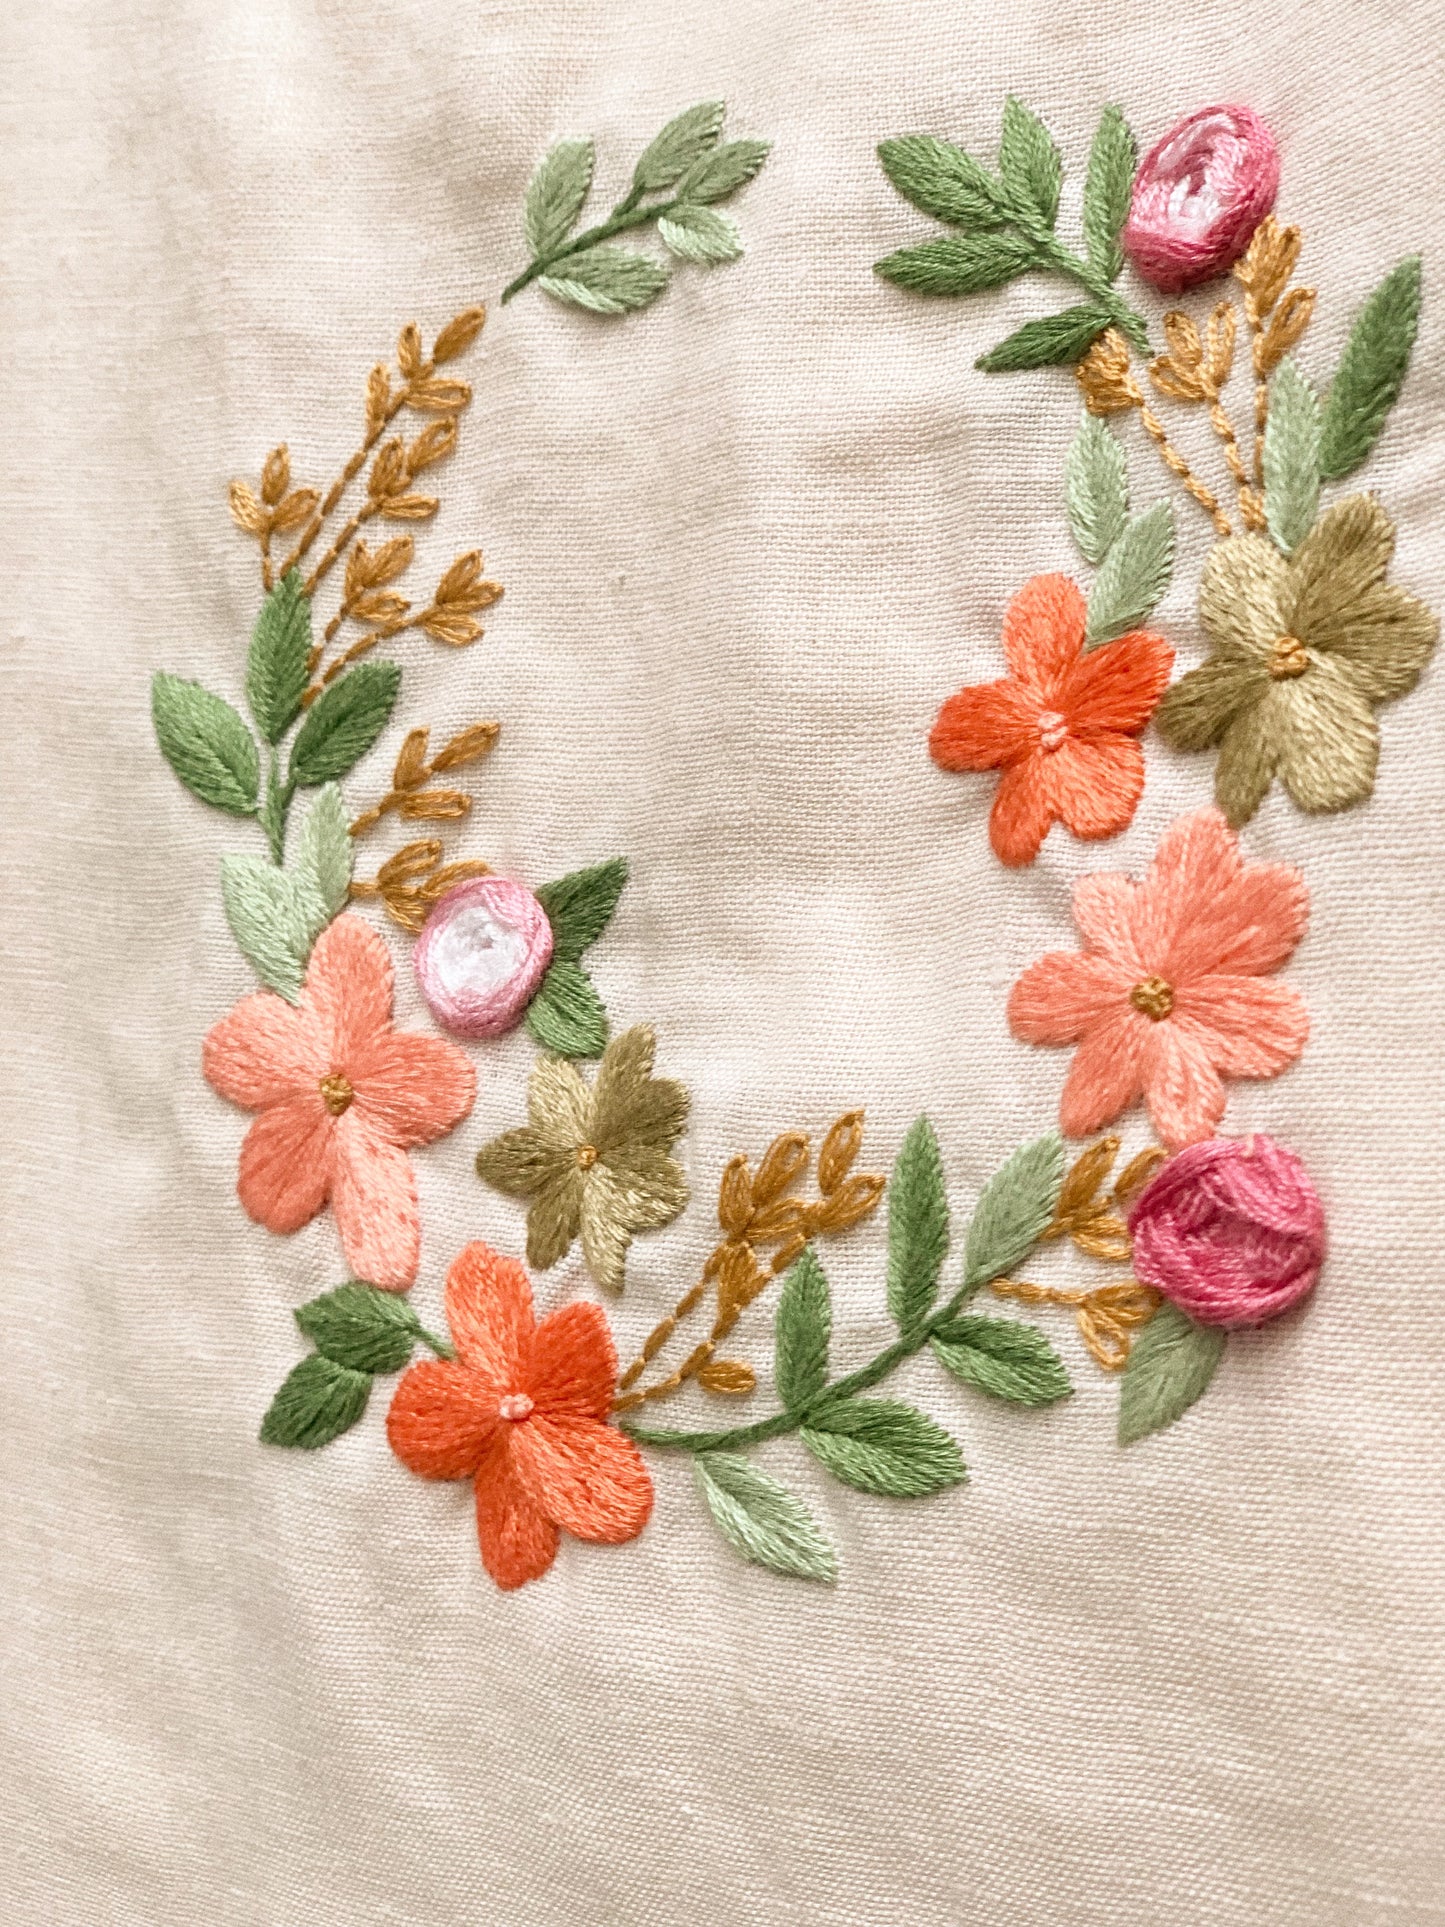 Hoa Mai Wreath- Floral Linen Tote Bag